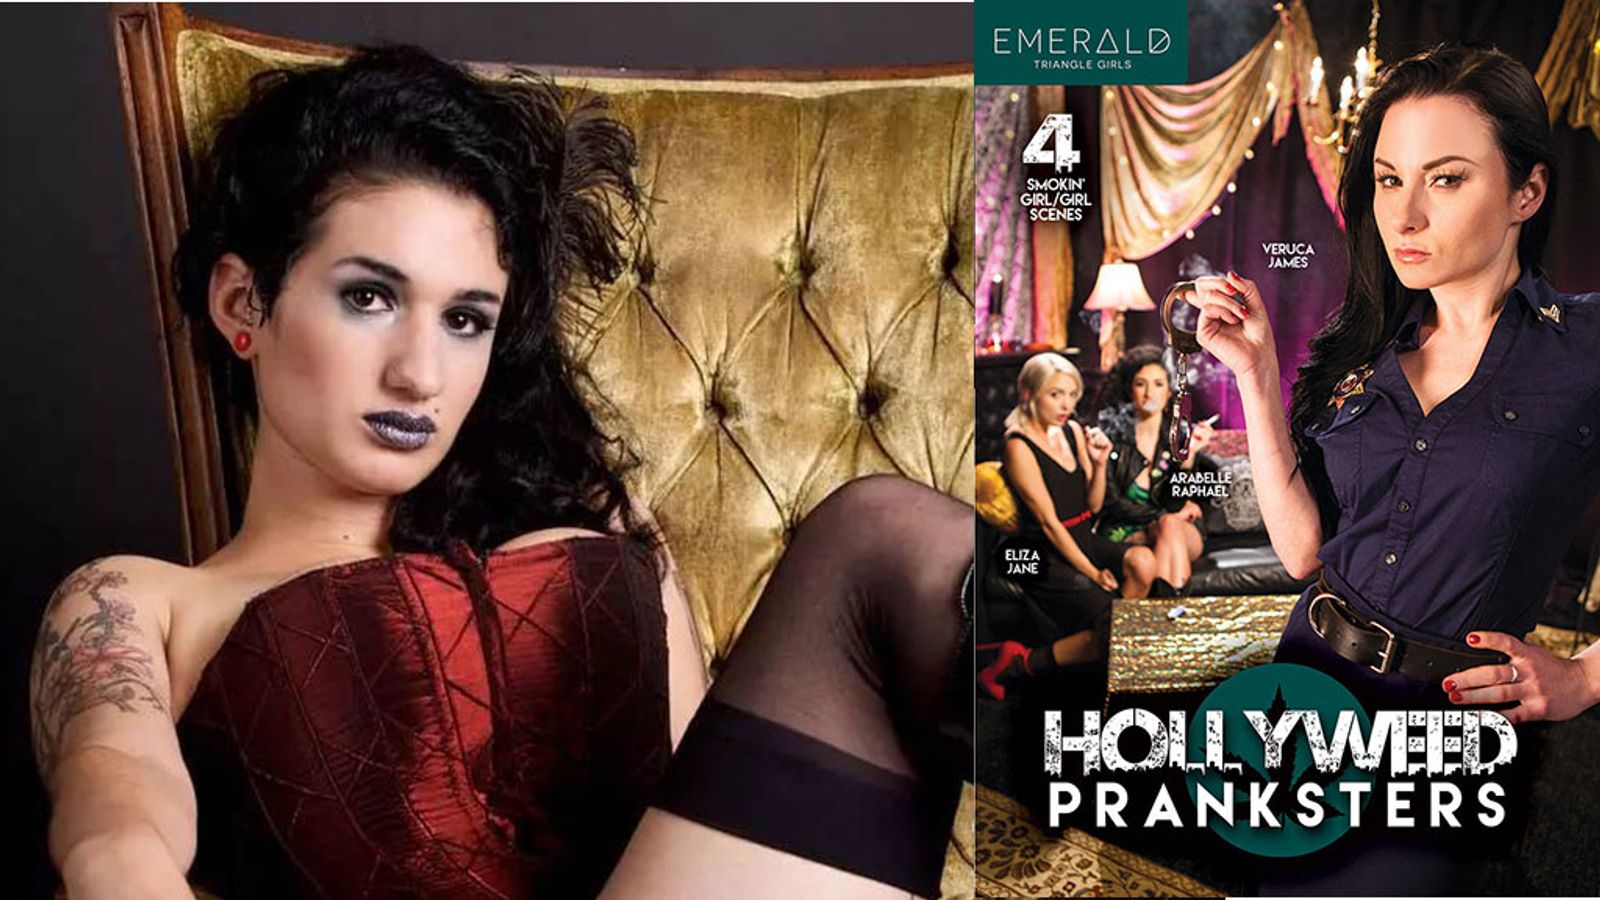 EmeraldTriangleGirls Fete Oct. 31 With 'Hollyweed Pranksters' DVD